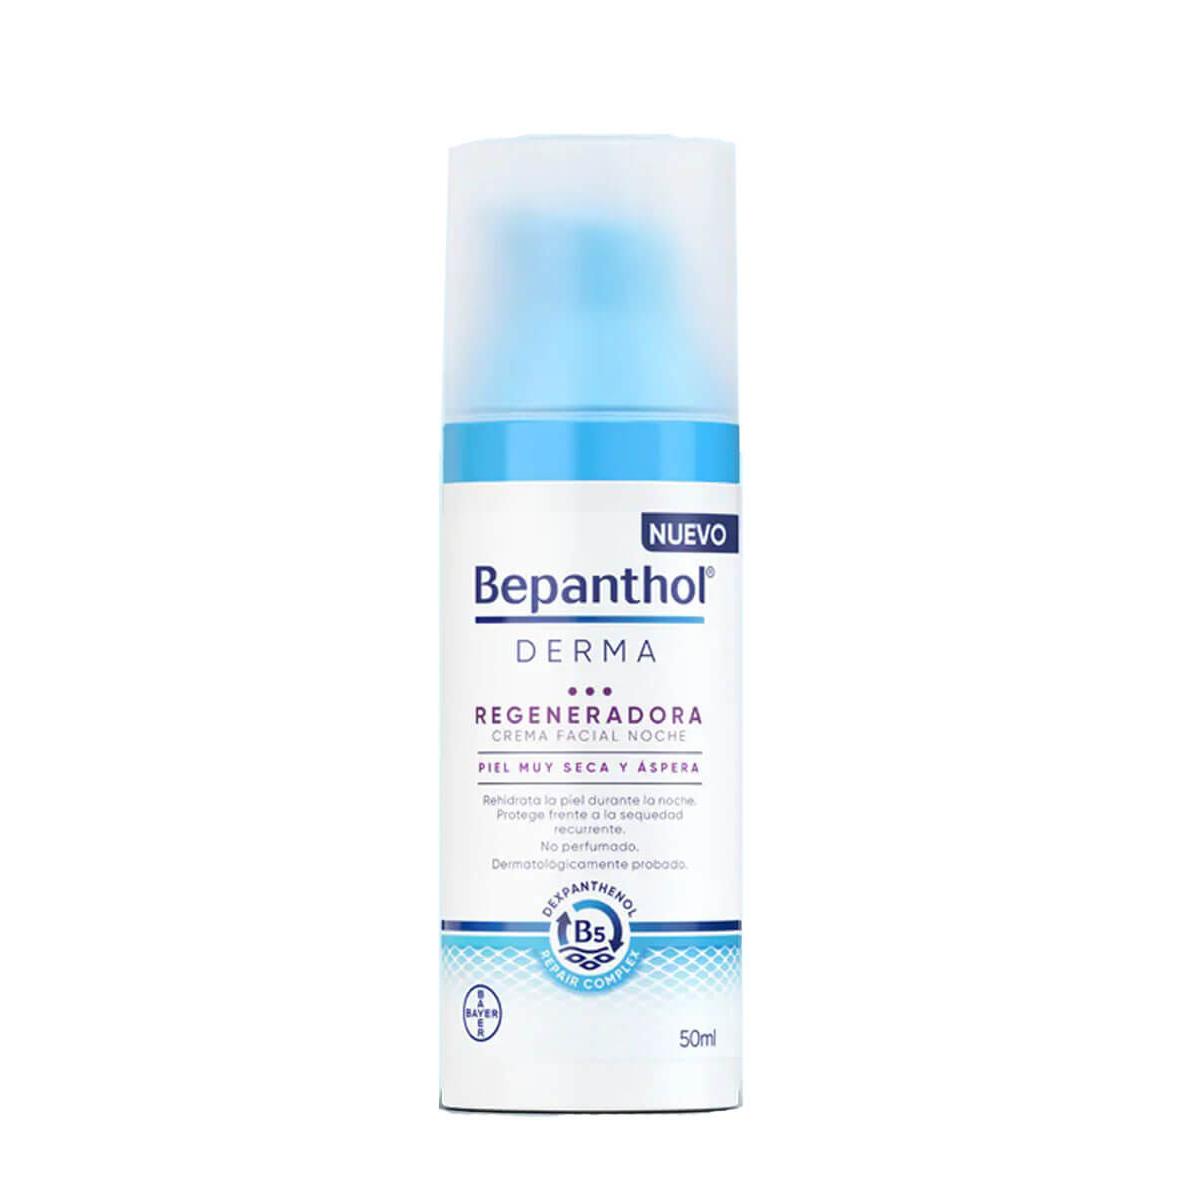 Bepanthol - Bepanthol® derma crema facial regeneradora noche 50 ml